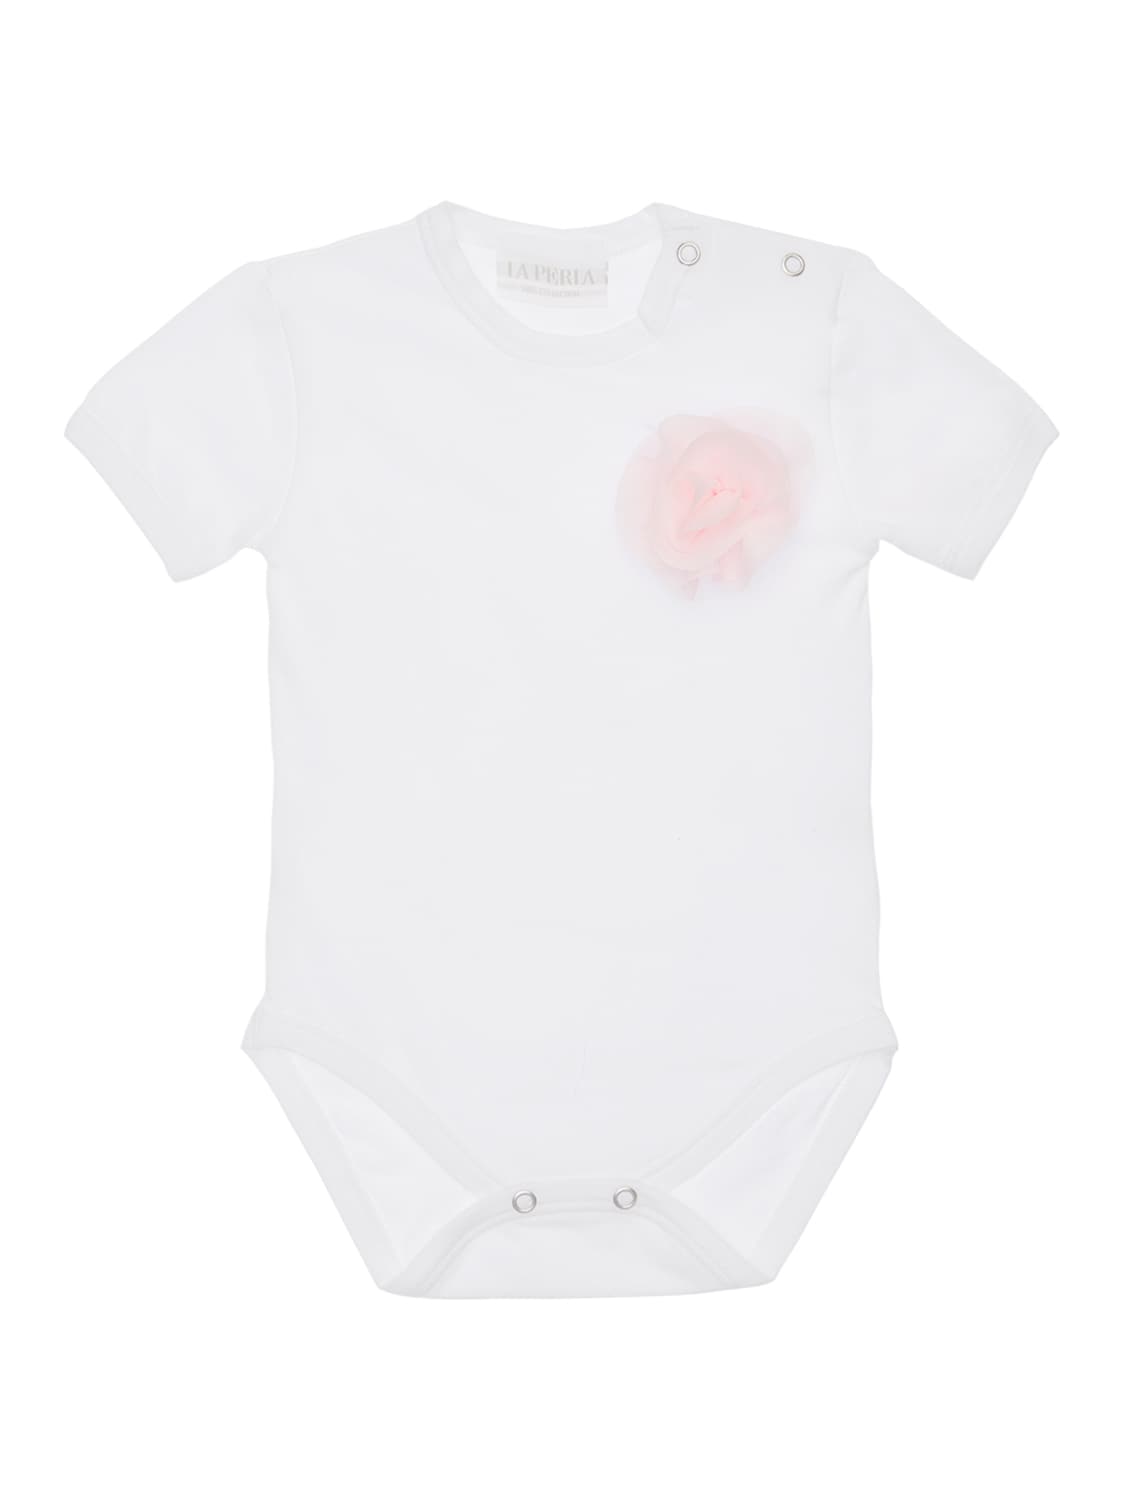 La Perla Babies' Lvr Cotton Bodysuit, Headband & Socks In Pink